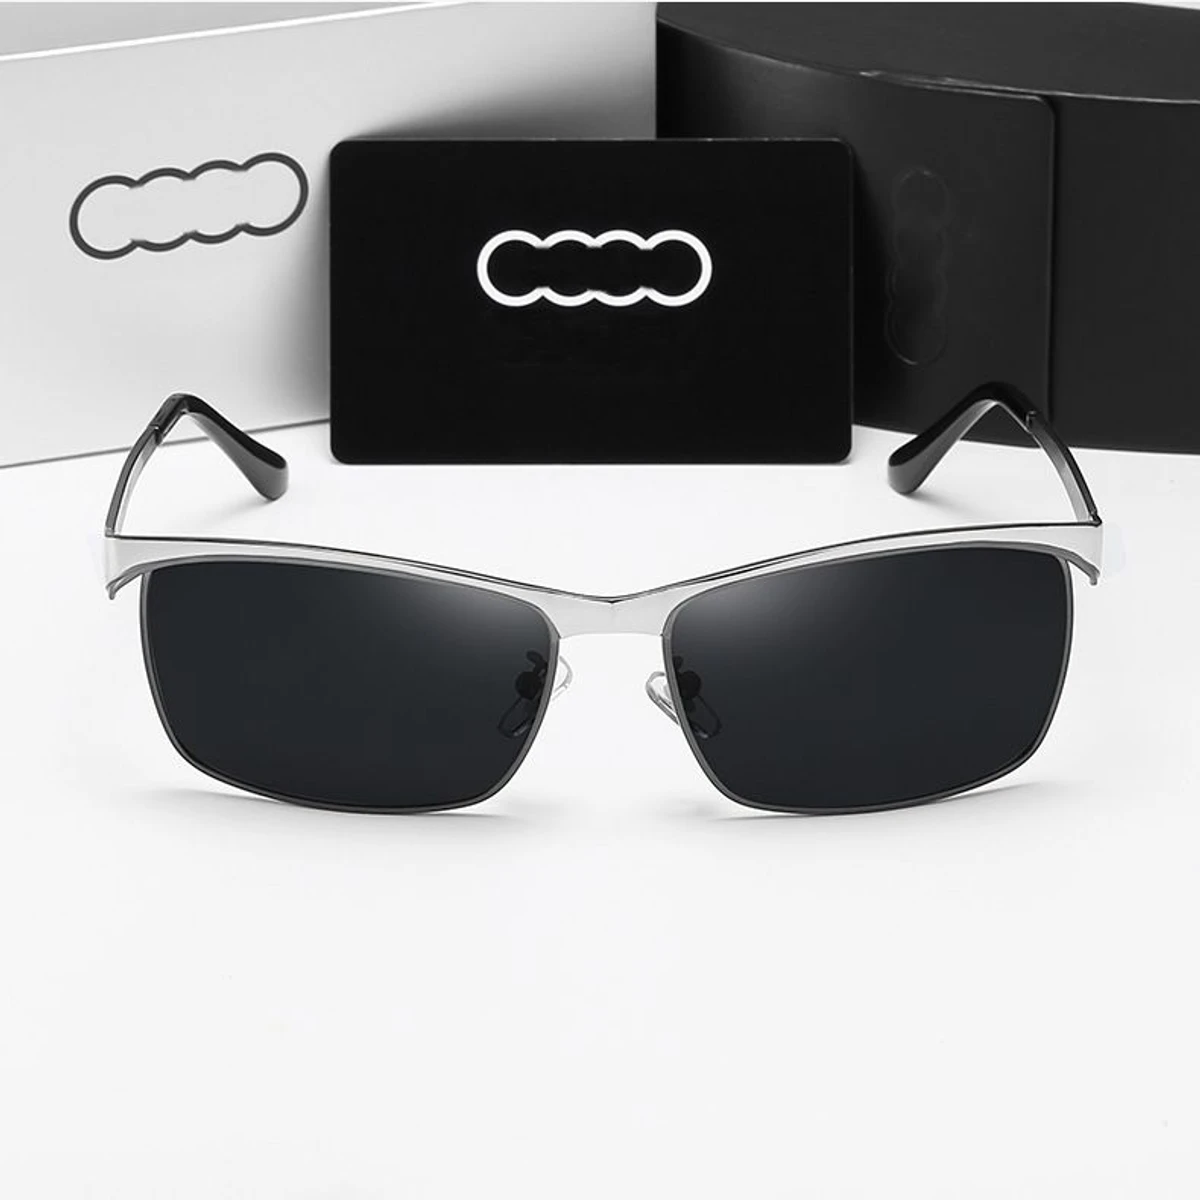 New Audi Polarized Sunglasses